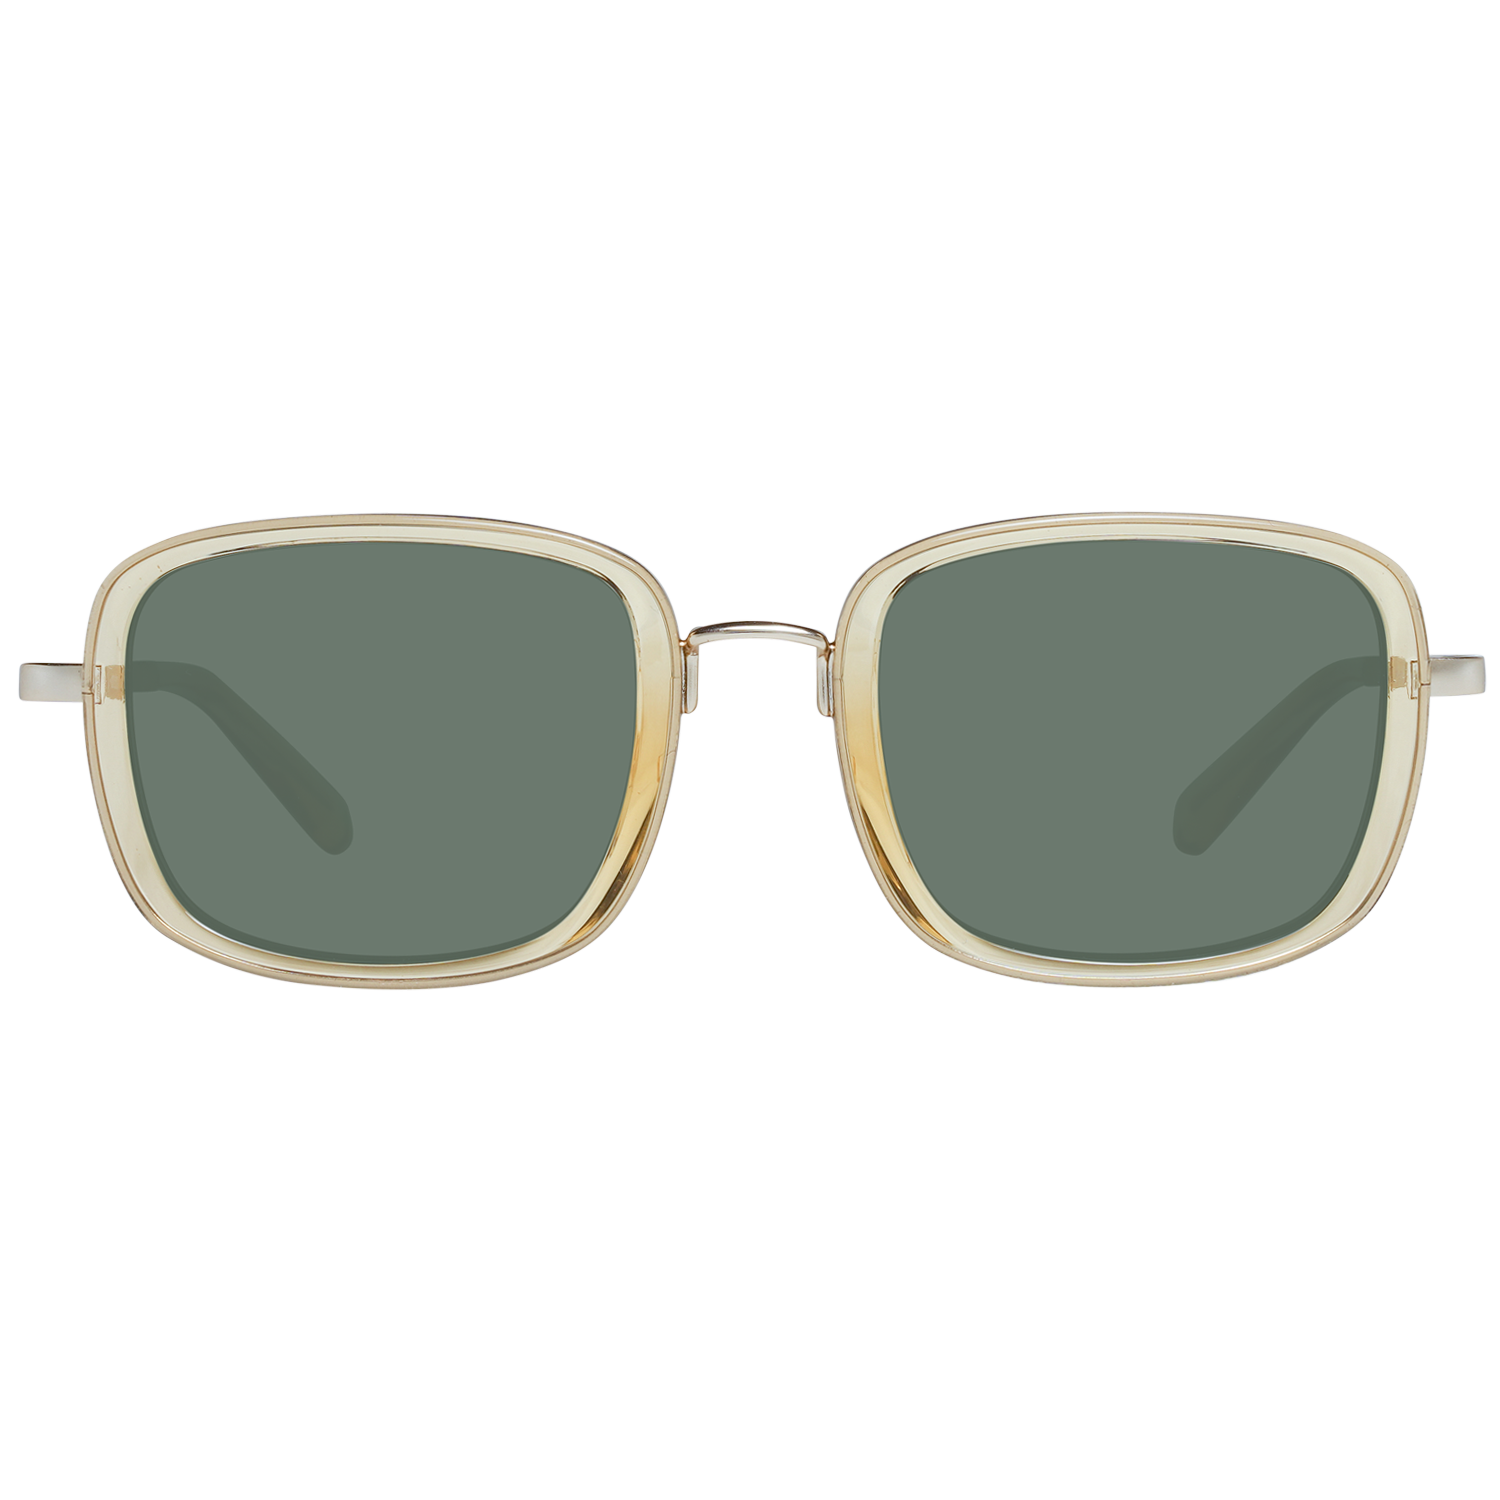 Benetton Sunglasses Benetton Sunglasses BE5040 102 48 Eyeglasses Eyewear UK USA Australia 